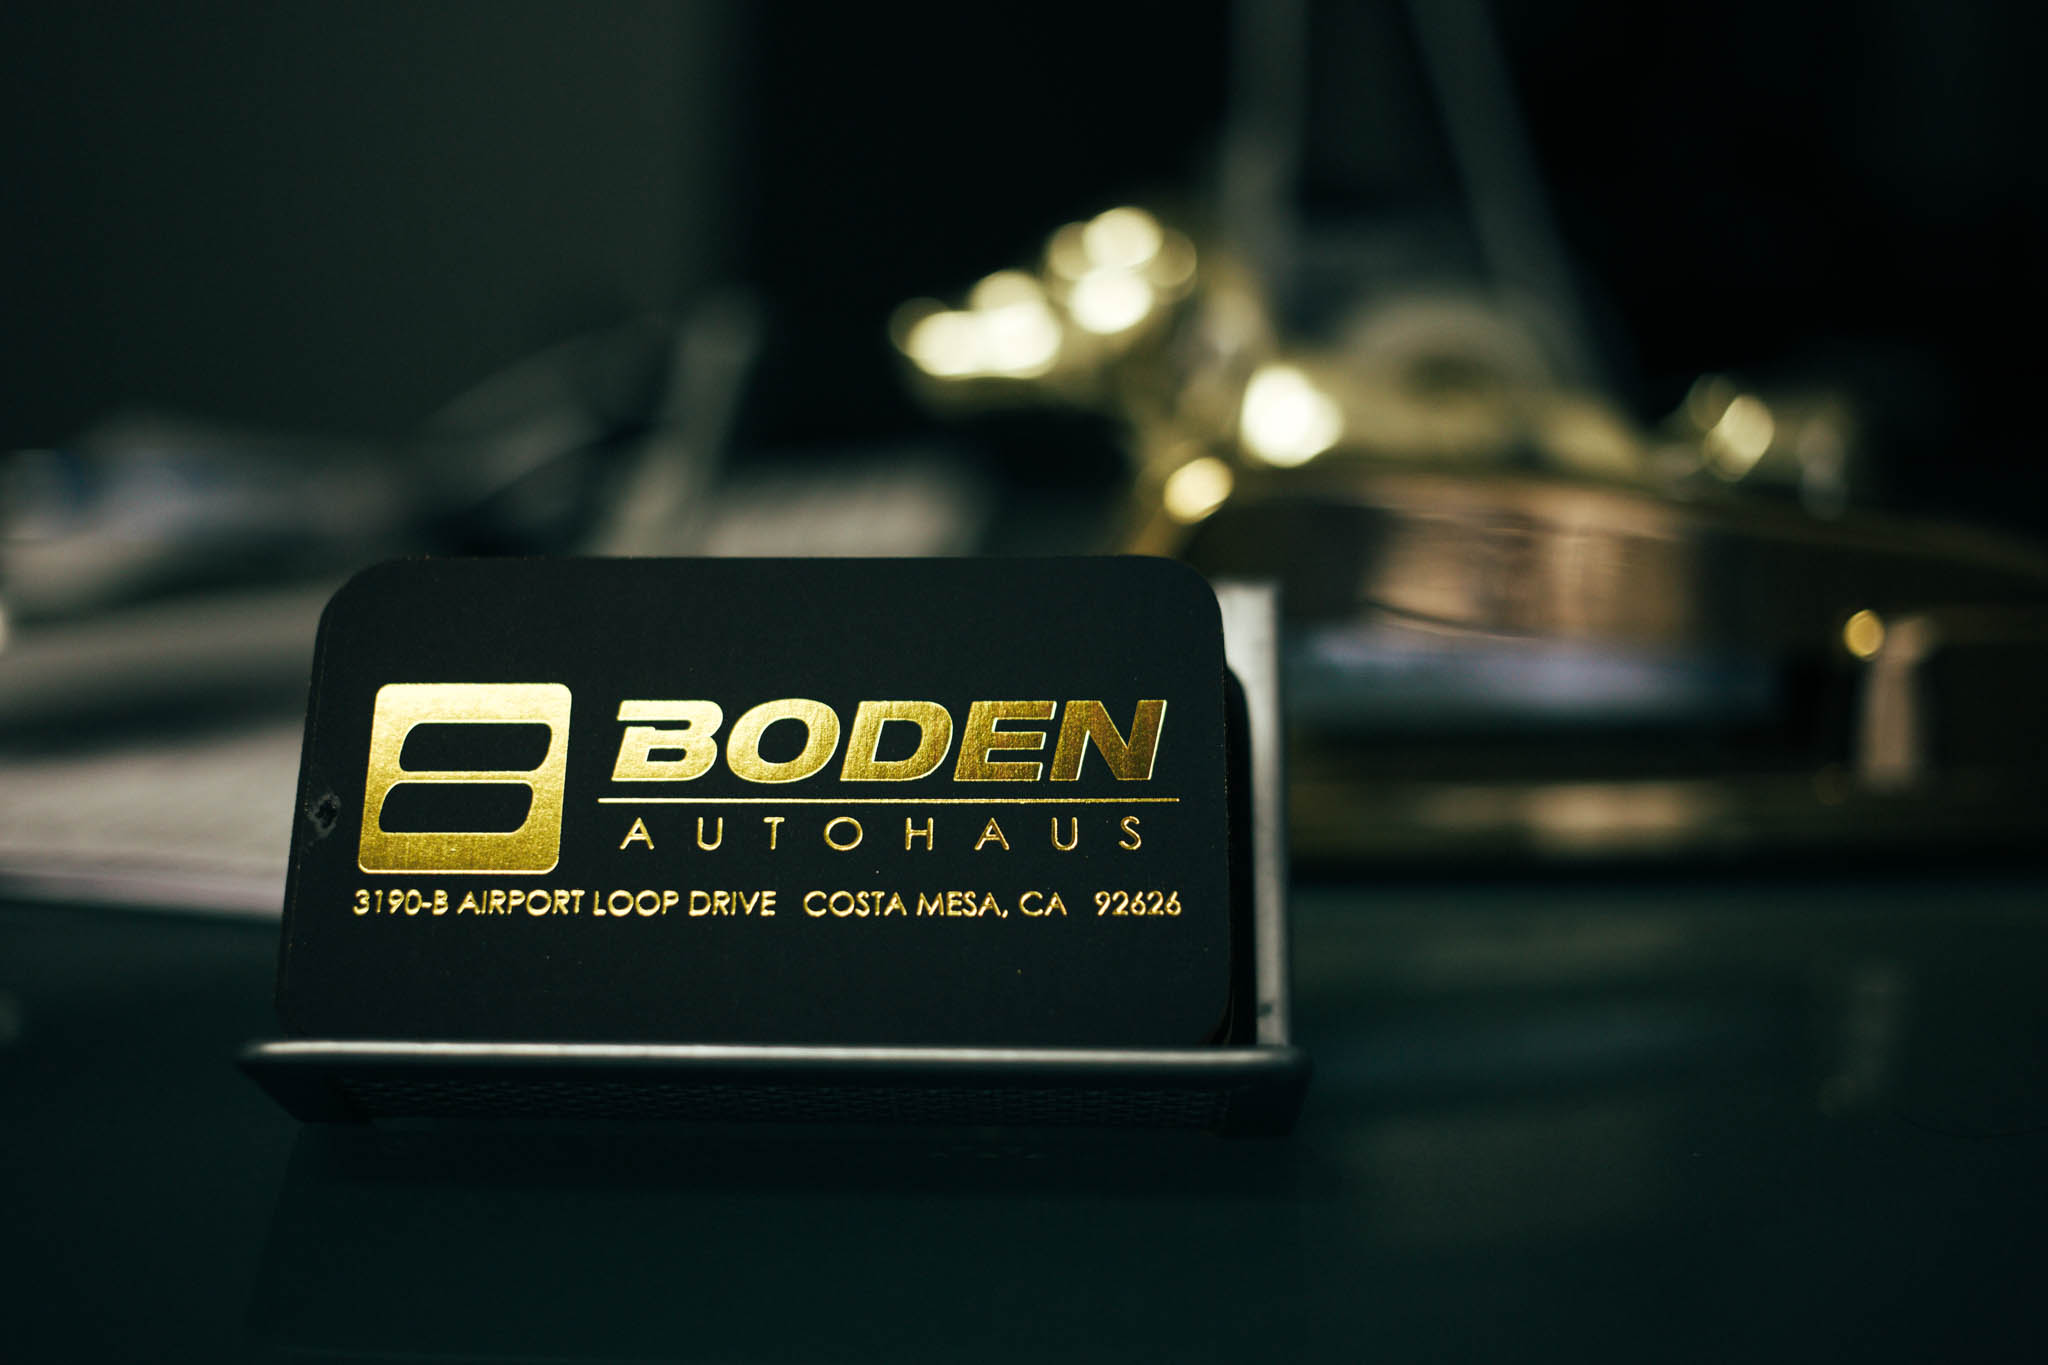 Stay_Driven_Boden_Autohaus_Shop_Tour-7.jpg